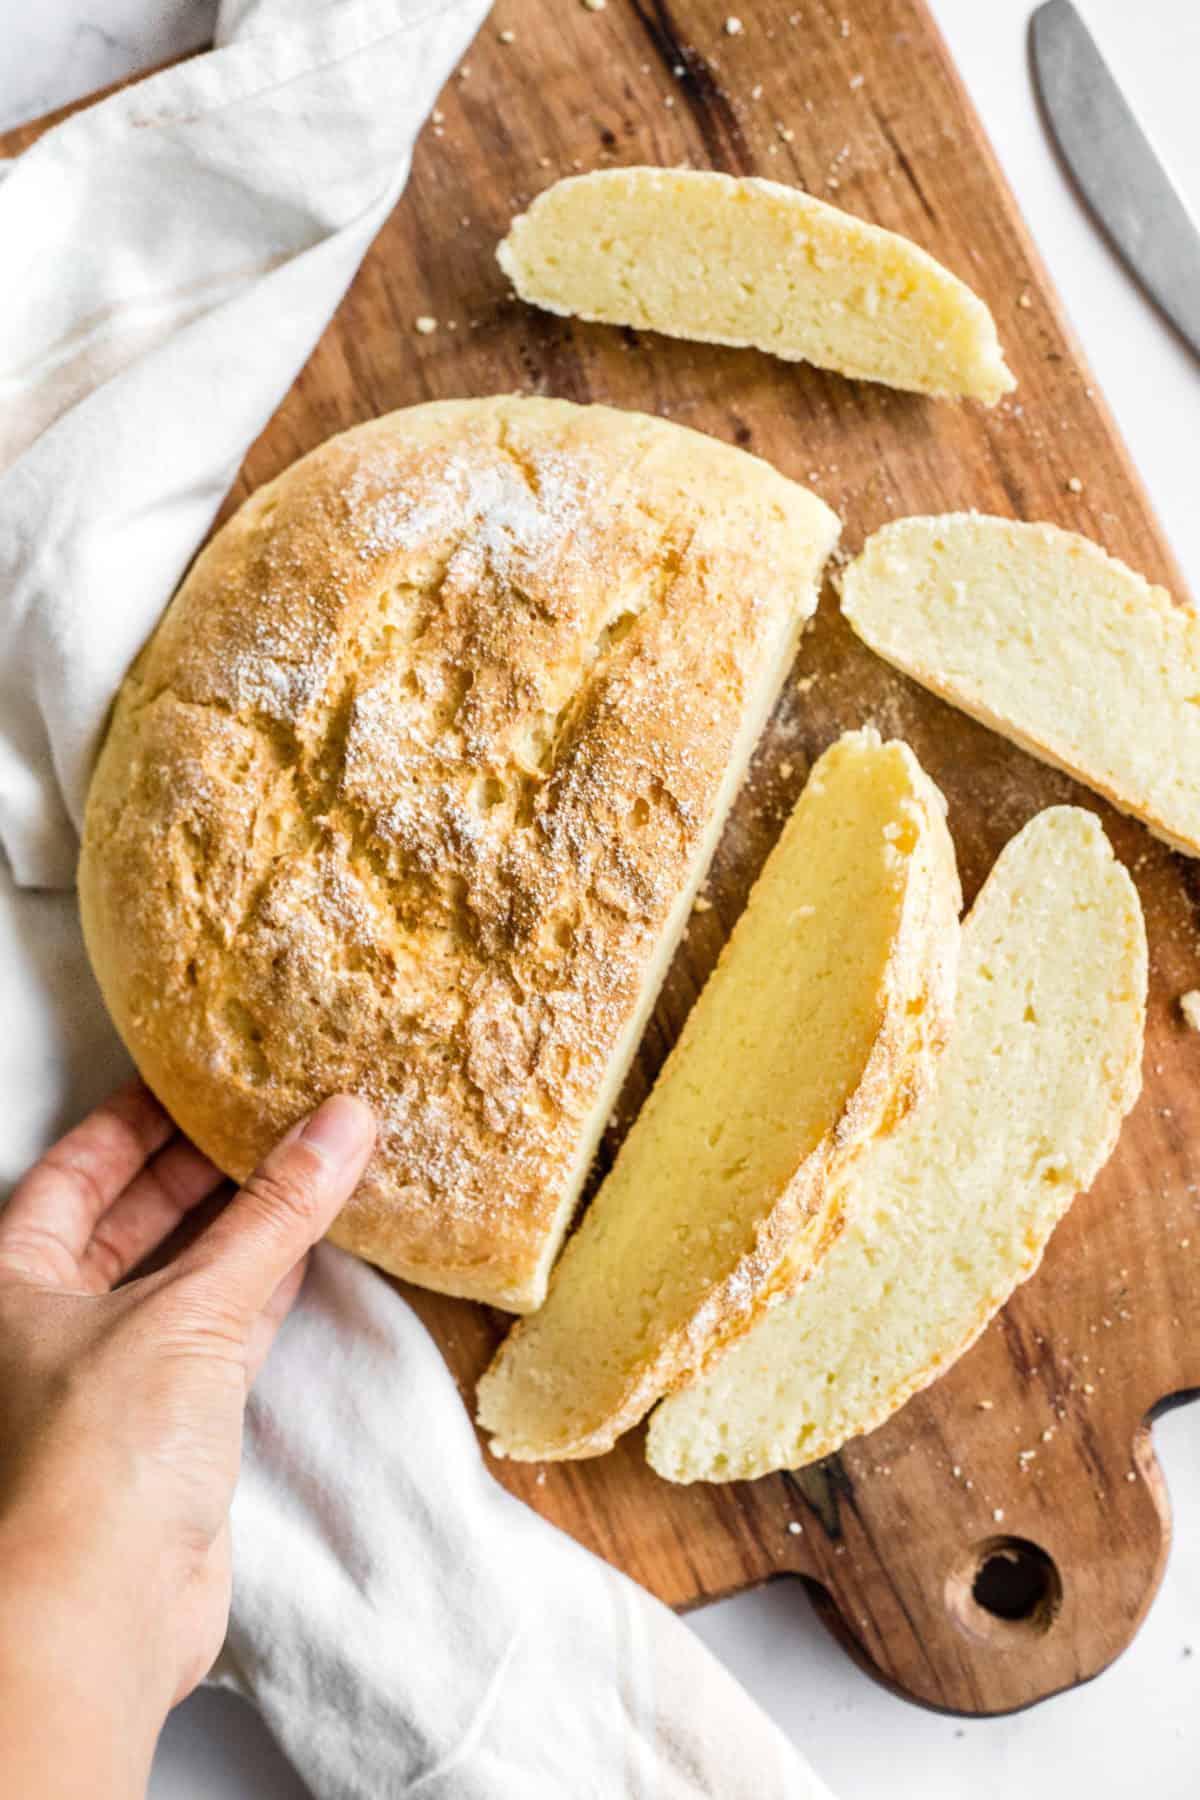 Hand reaching for gluten-free artisan bread on wooden board.